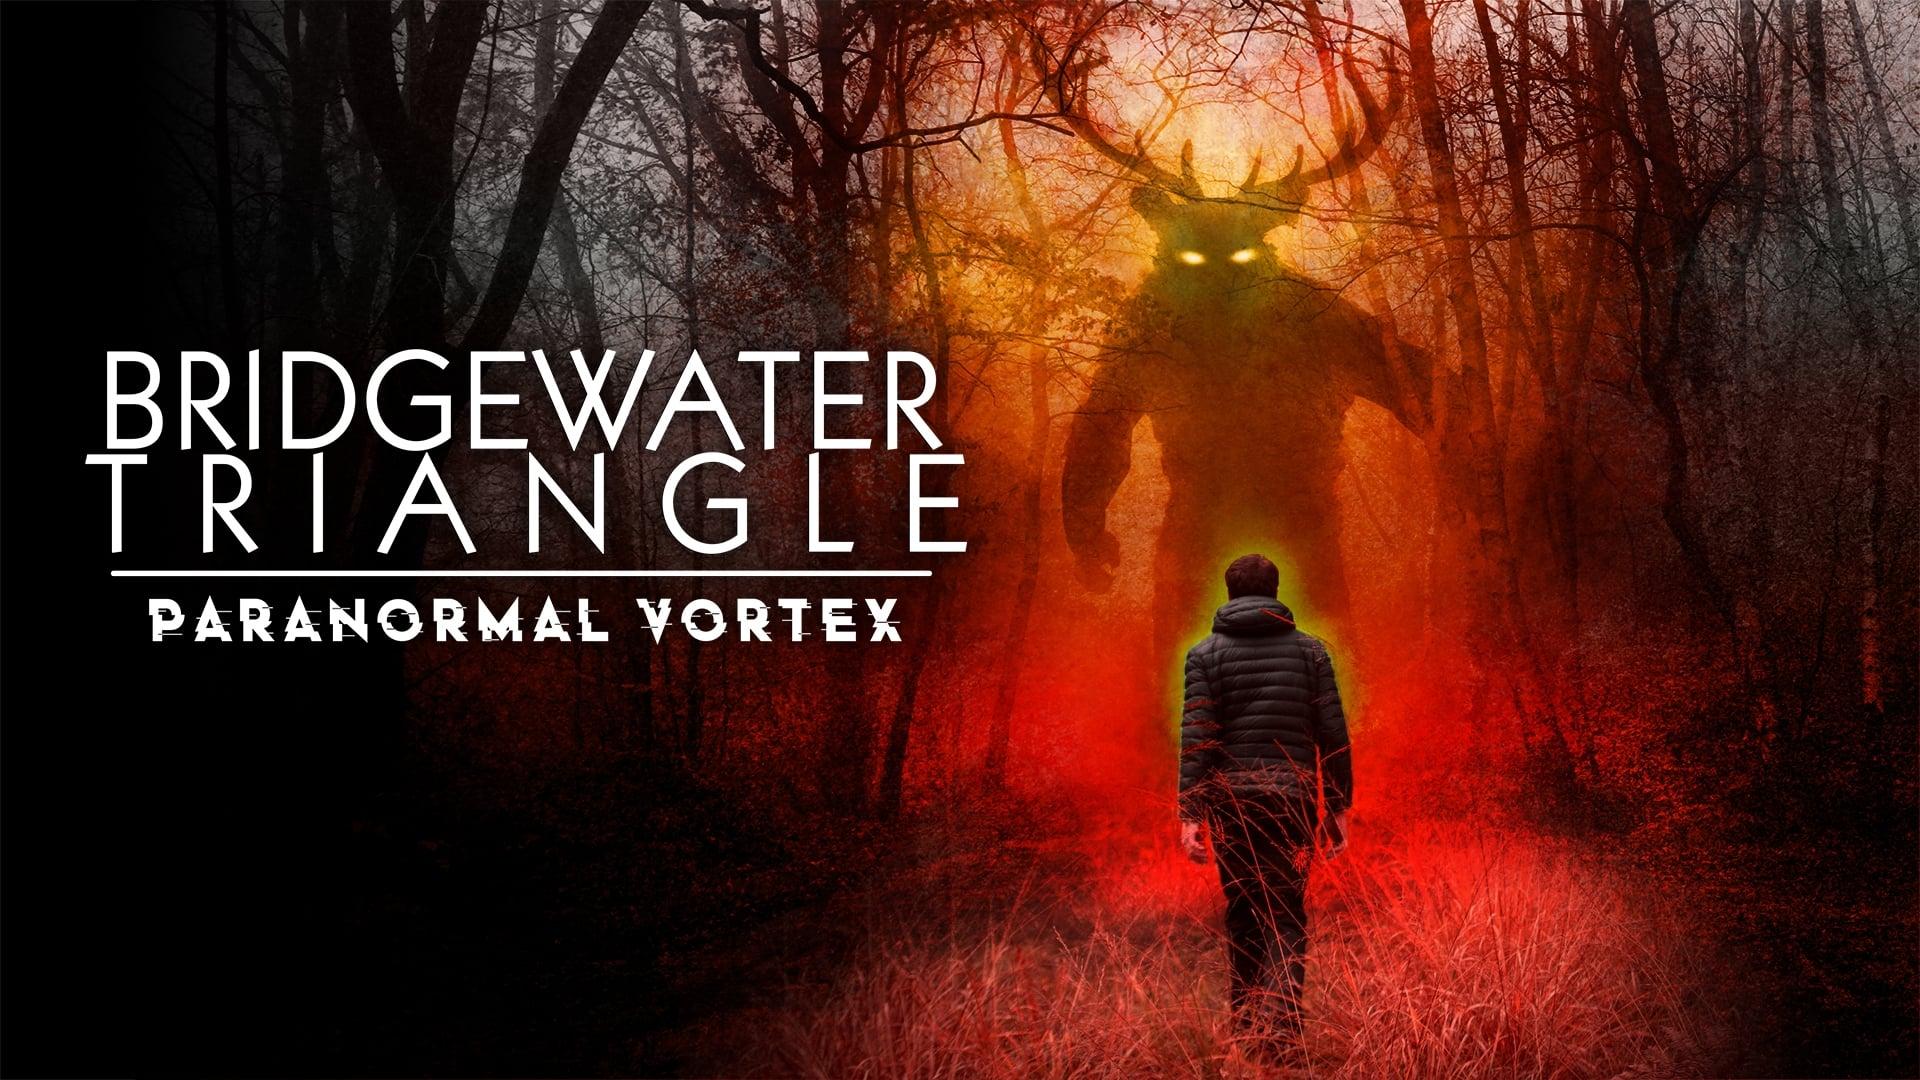 Bridgewater Triangle: Paranormal Vortex backdrop